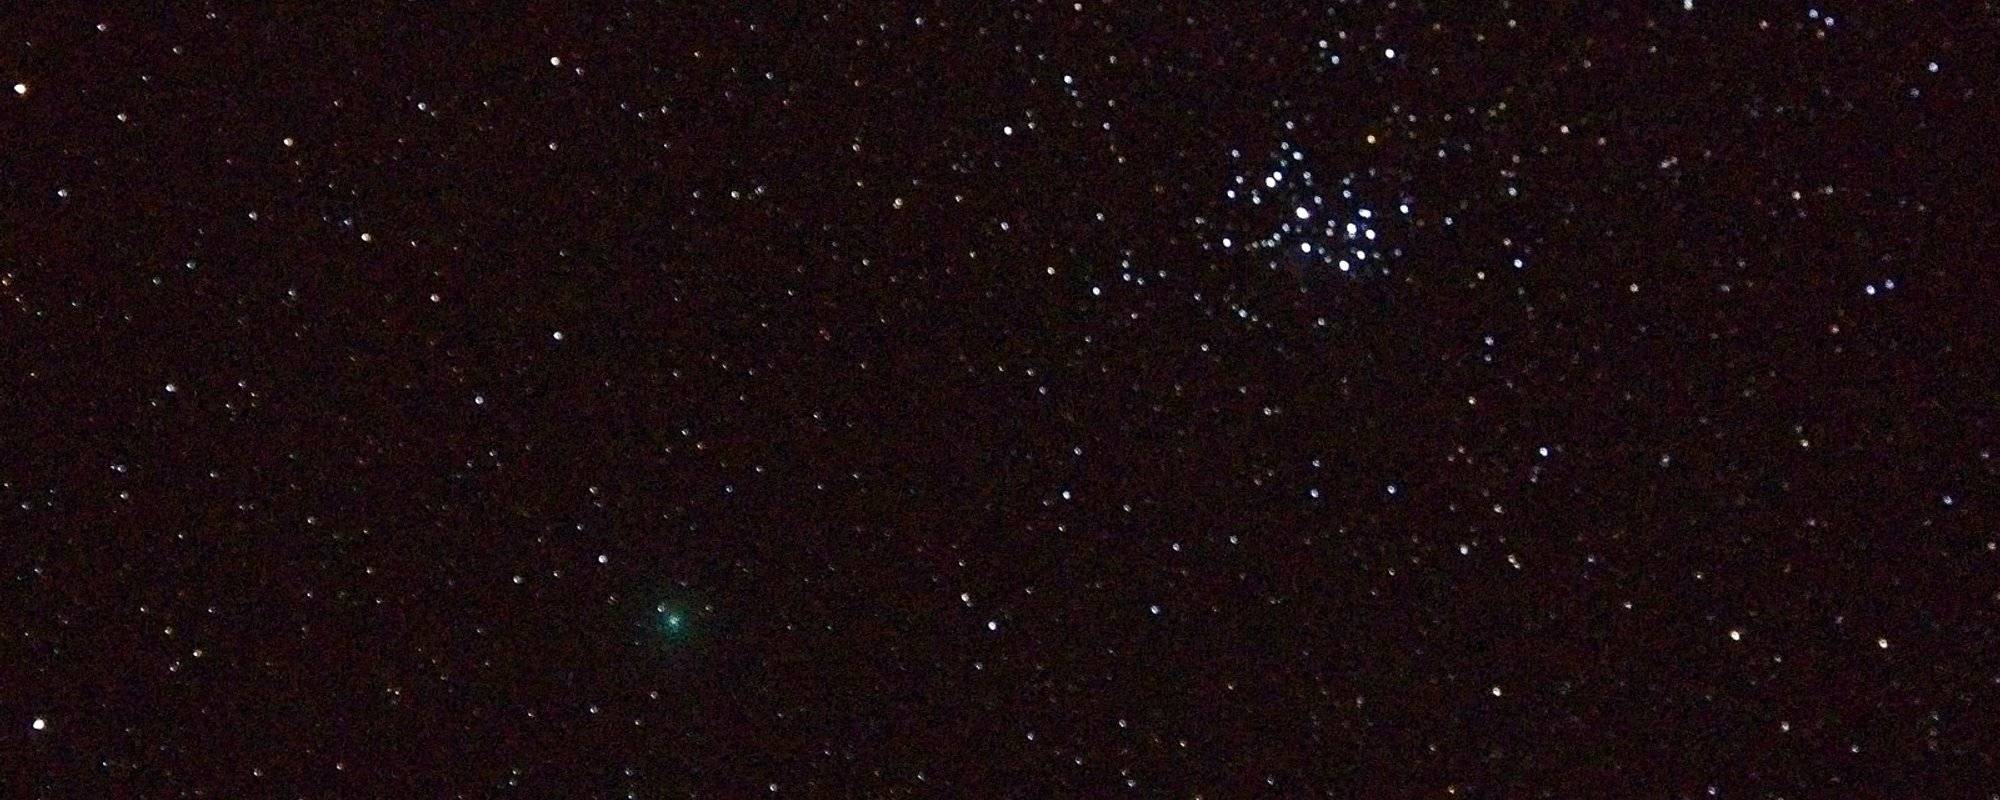 Chasing Comet 46p/Wirtanen